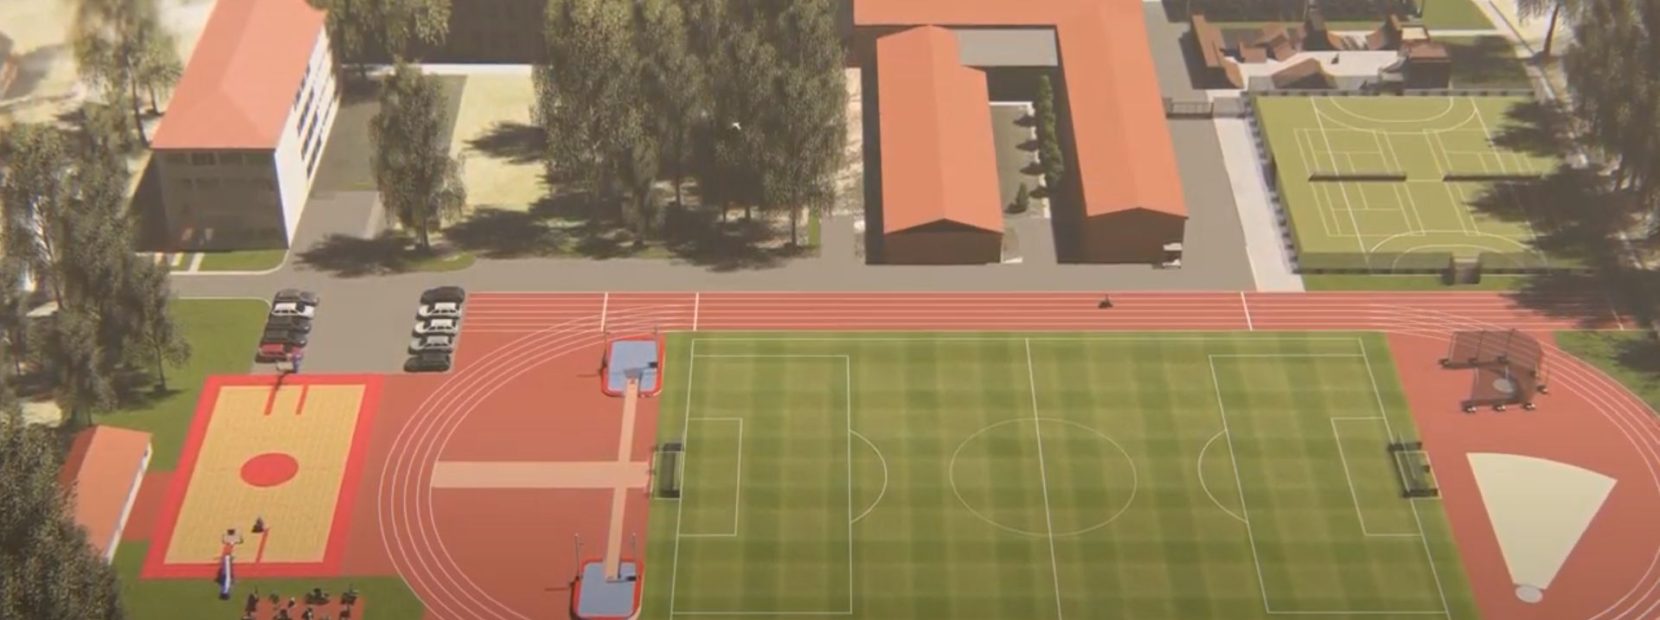 KLM Projekt has designed sports facilities and stadiums across Estonia